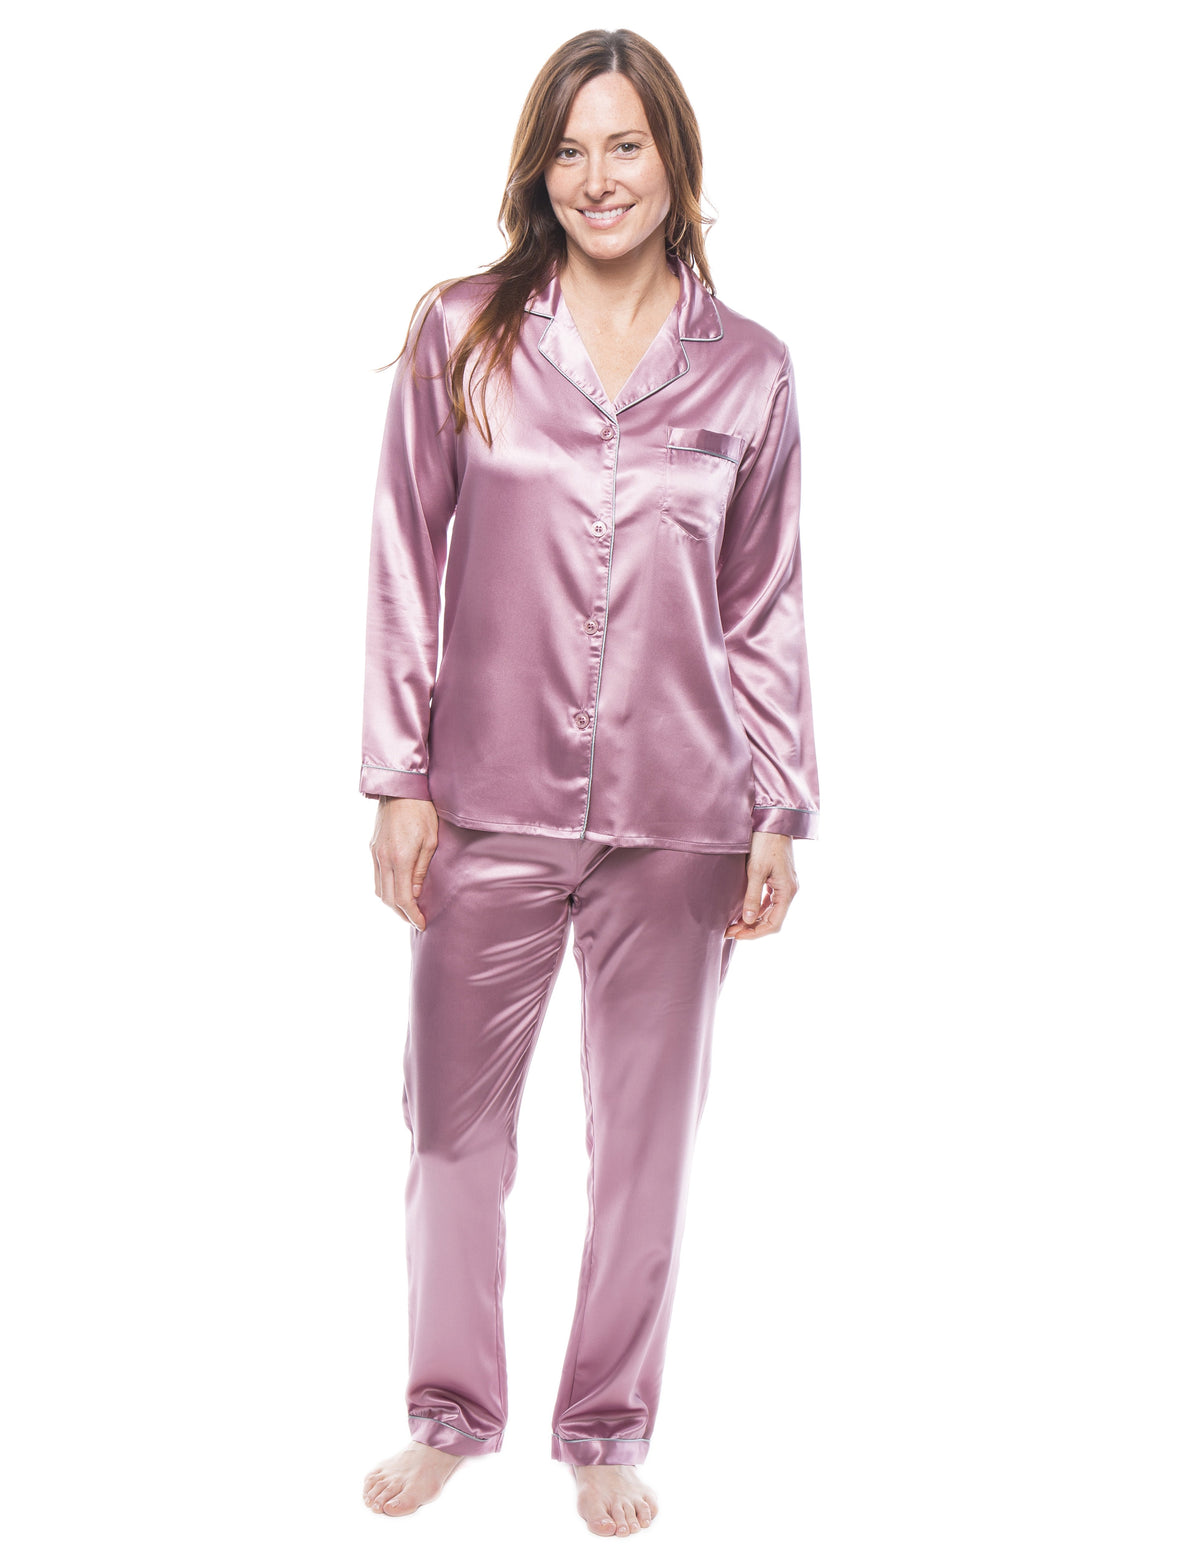 Women's Satin Pajama/Sleepwear Set - Mauve